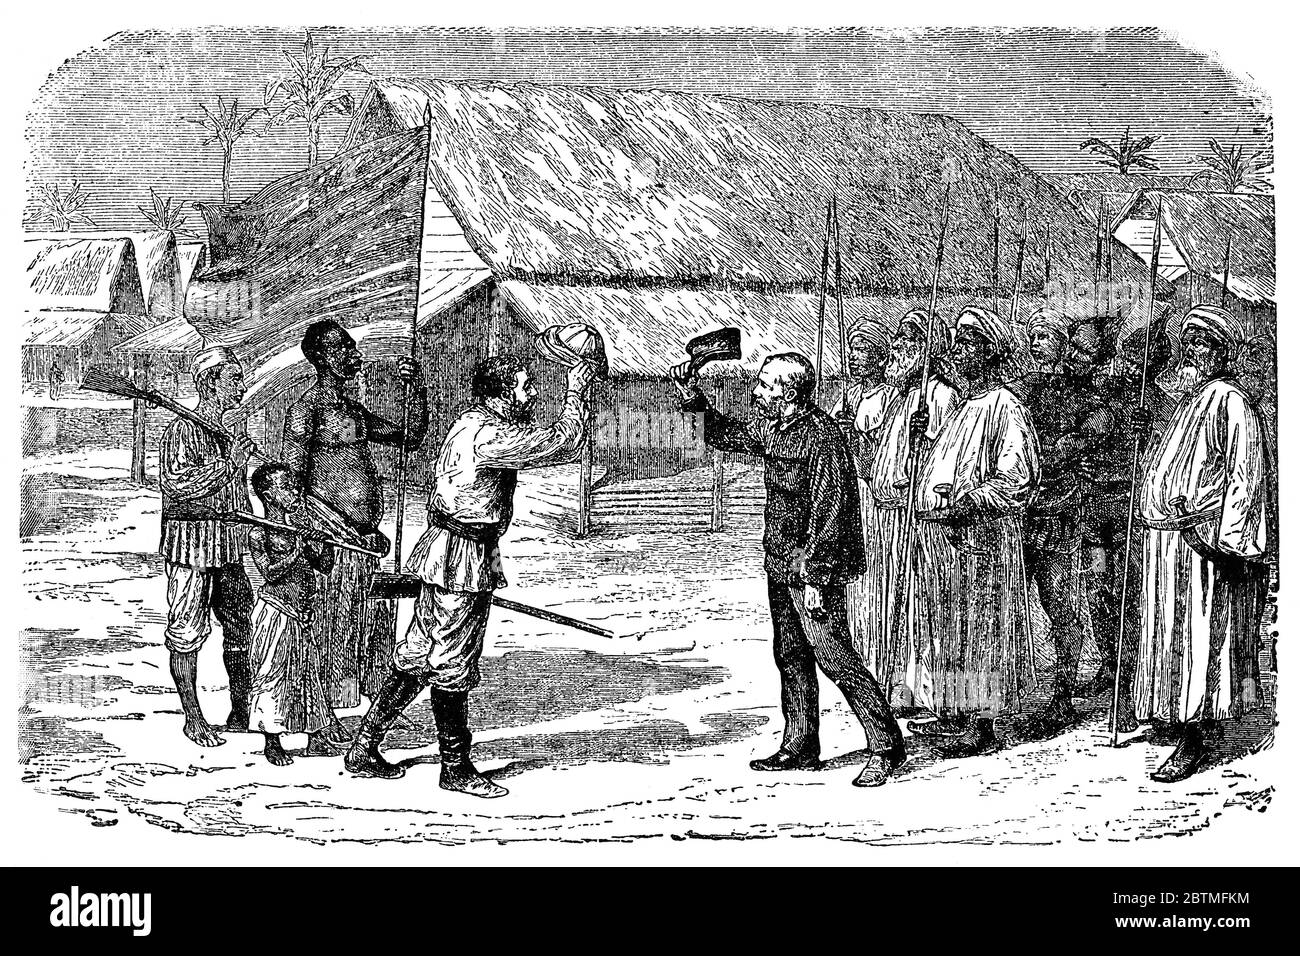 Henry Stanley fand Dr. David Livingstone am 10. November 1871 in Ujiji, nahe dem Tanganjikasee. Illustration des 19. Jahrhunderts. Weißer Hintergrund. Stockfoto